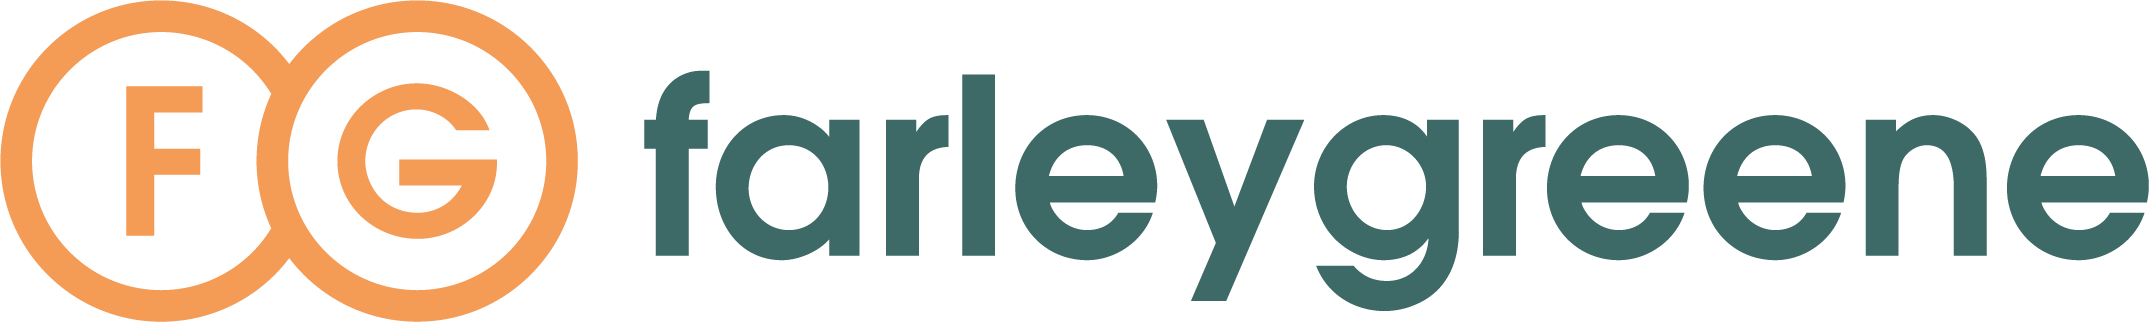 Farleygreene Logo Horizontal